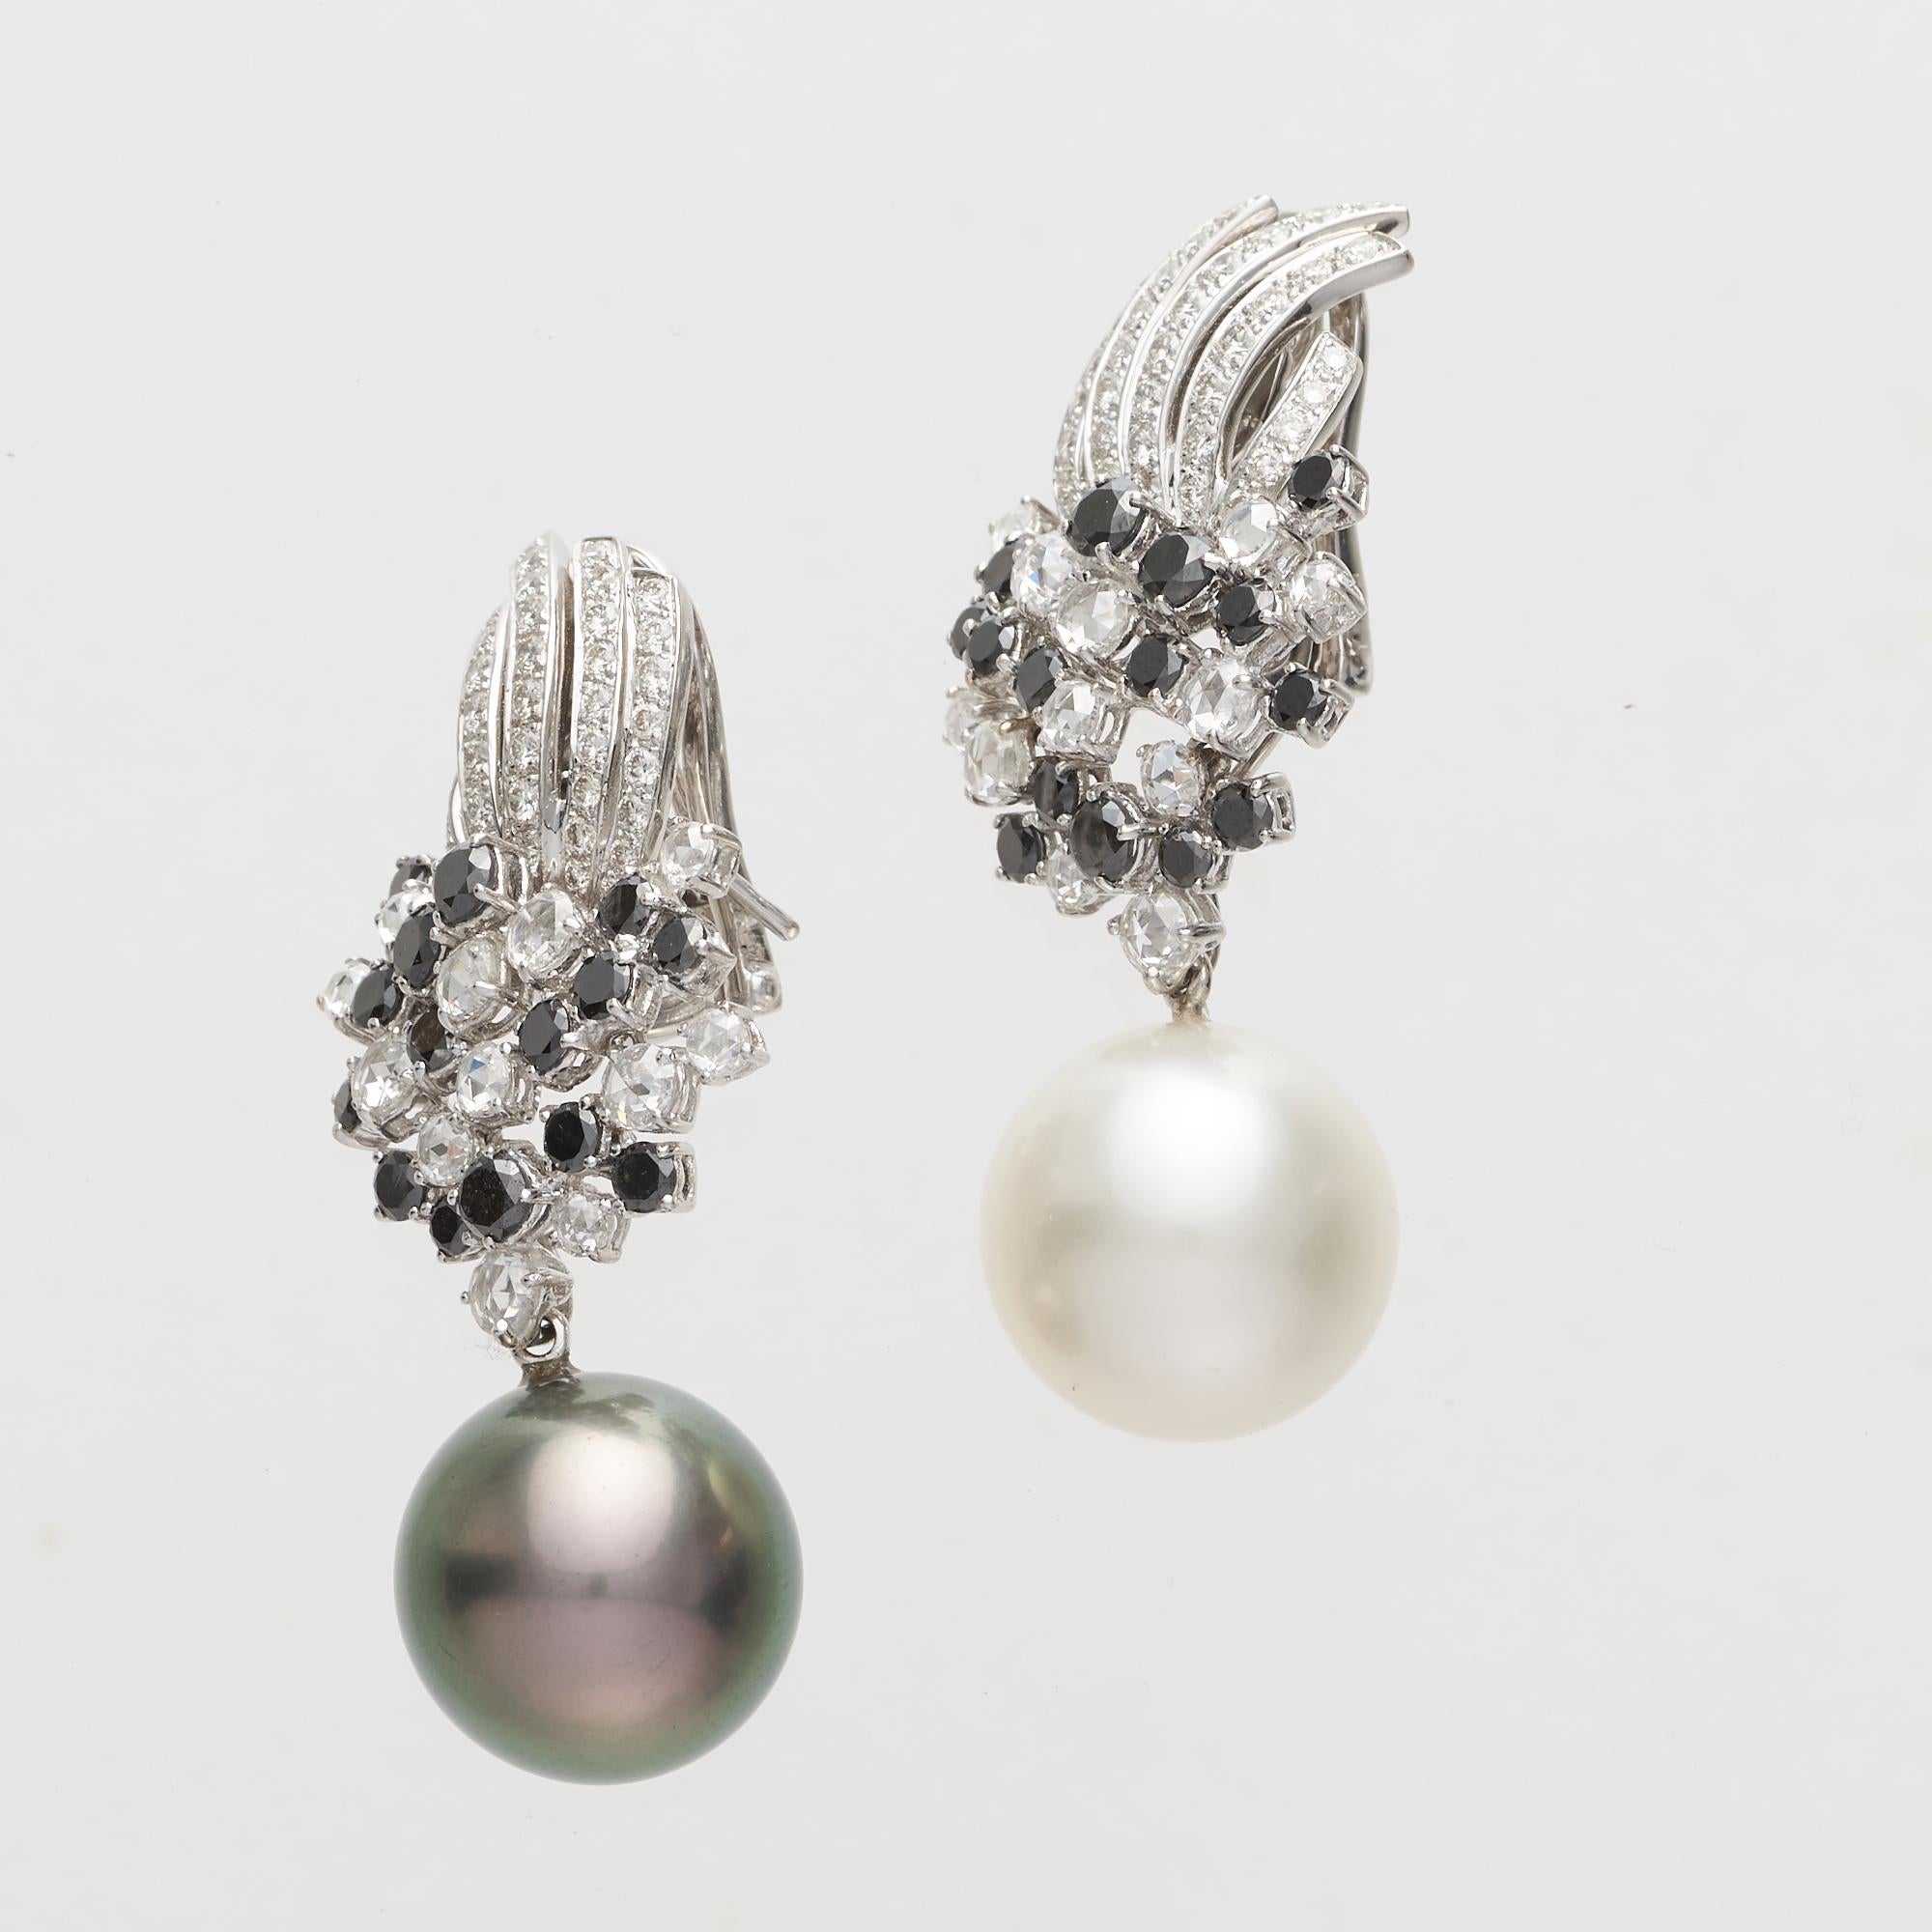 Mixed Cut Margot McKinney 18 Karat Gold Earrings with White/Black Diamonds, Pearl Drops